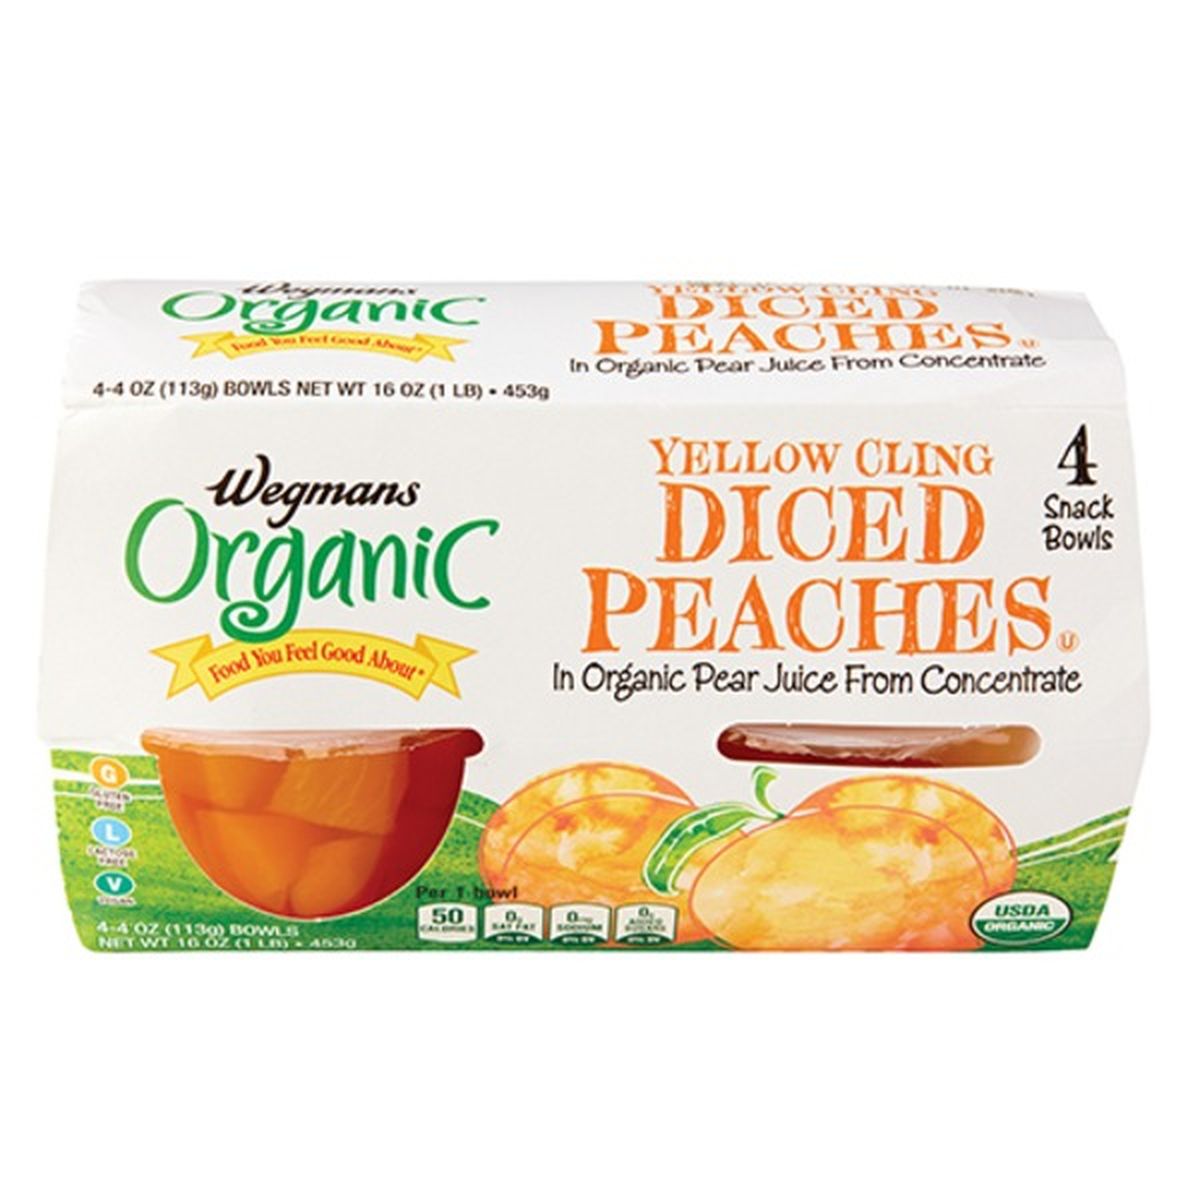 Calories in Wegmans Organic Yellow Cling Diced Peaches